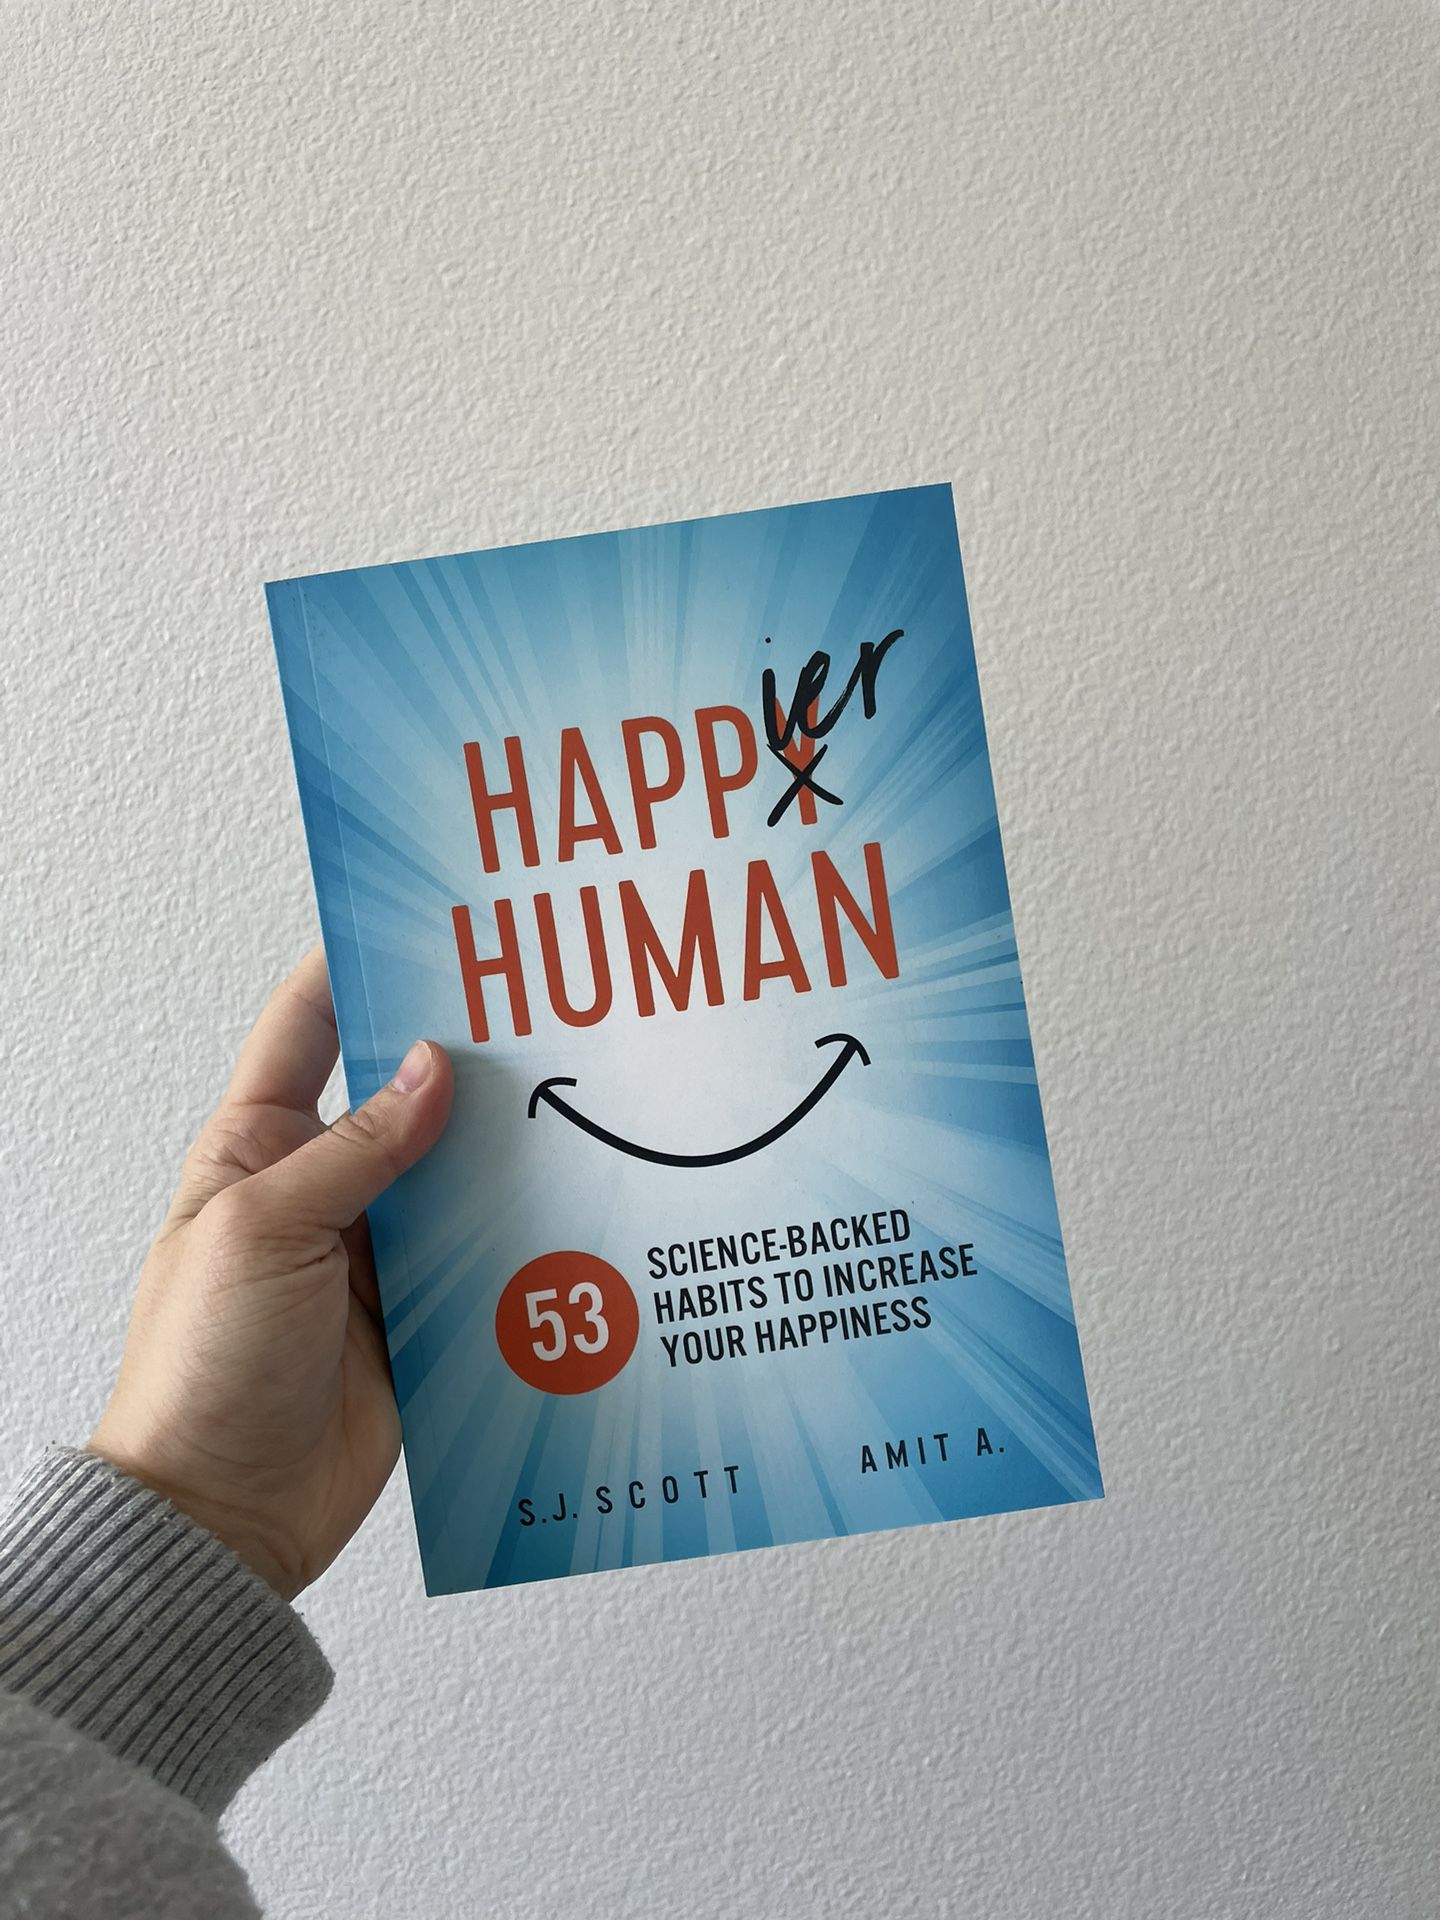 BOOK: Happier Human by S.J. Scott